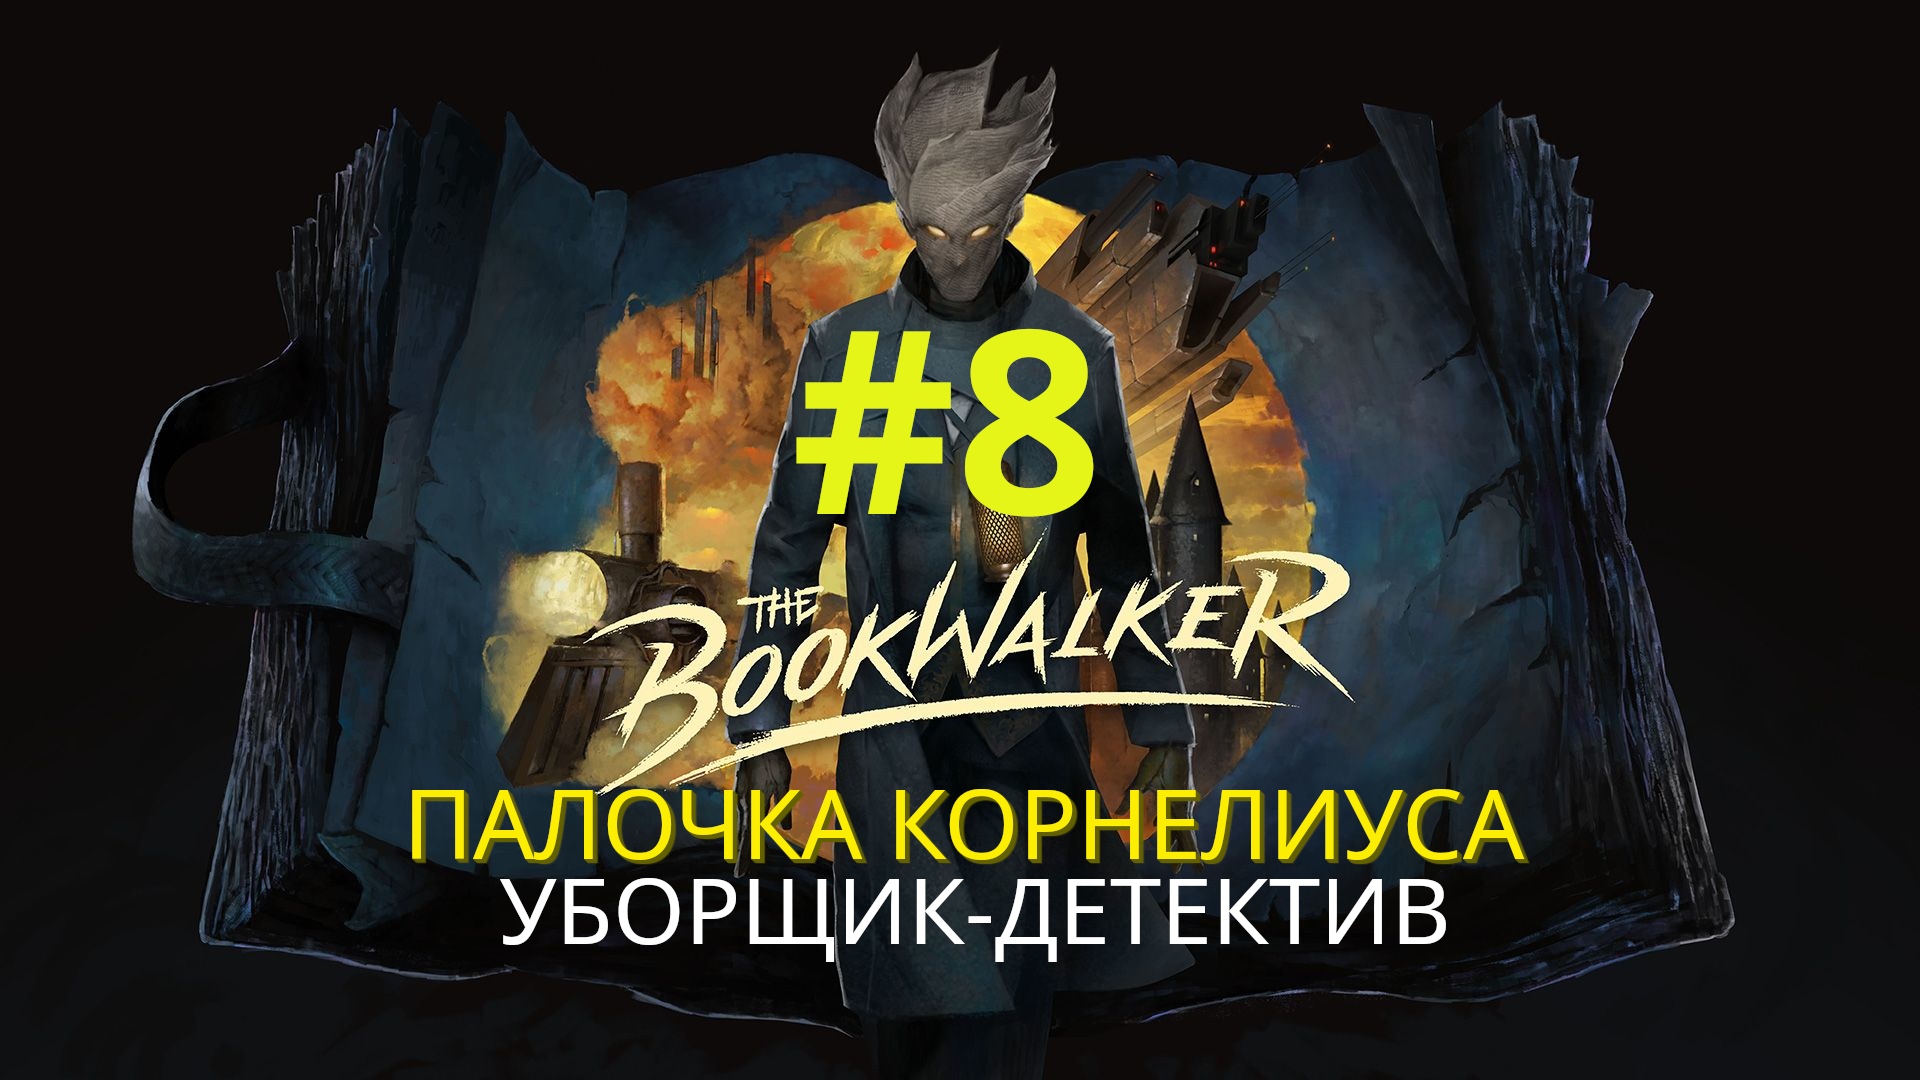 The Bookwalker: Thief of Tales | Уборщик-детектив / Палочка Корнелиуса | Прохождение #8